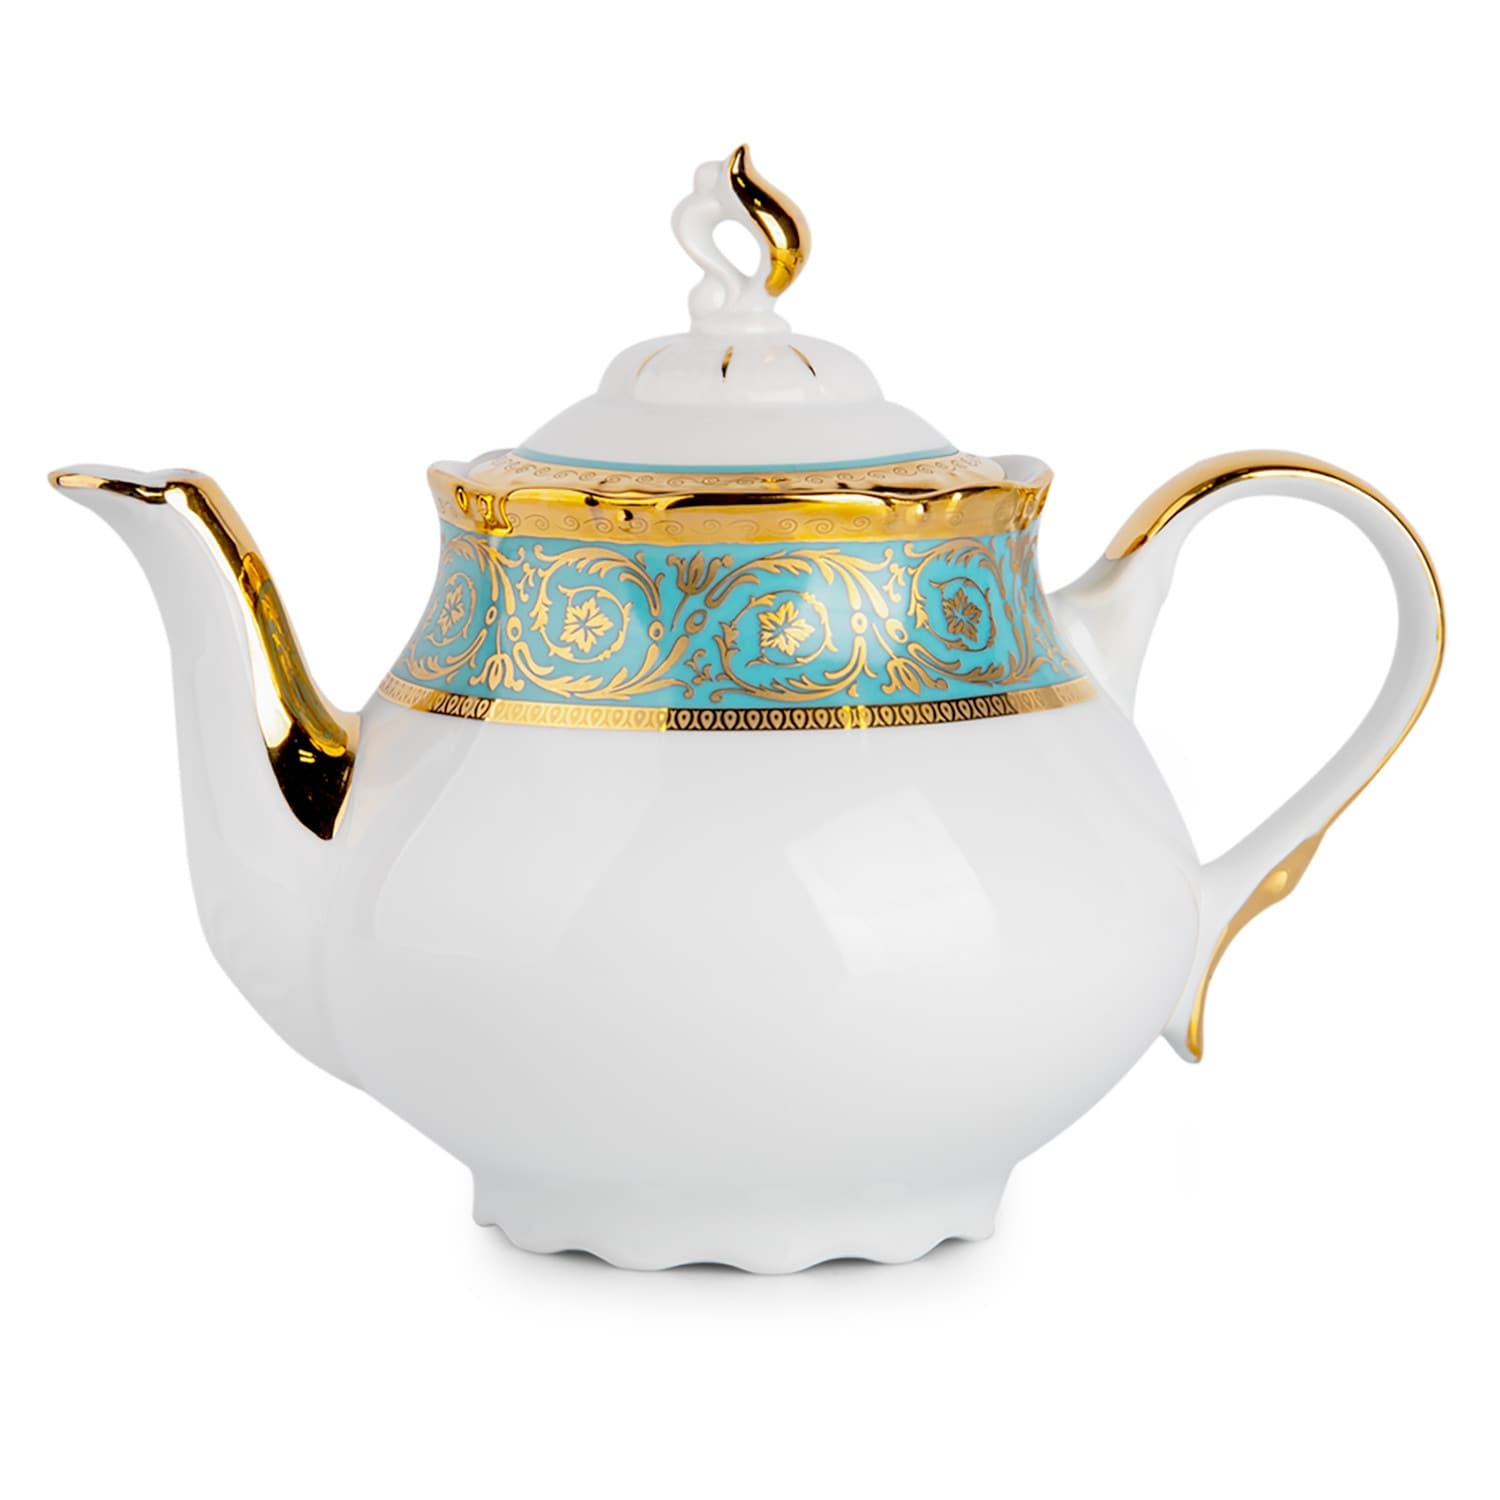 https://ak1.ostkcdn.com/images/products/is/images/direct/dd8d2d8eacde92cfc2fdf3f90fb2a2dc49b13f89/Royal-Green-Porcelain-Tea-Pot.jpg